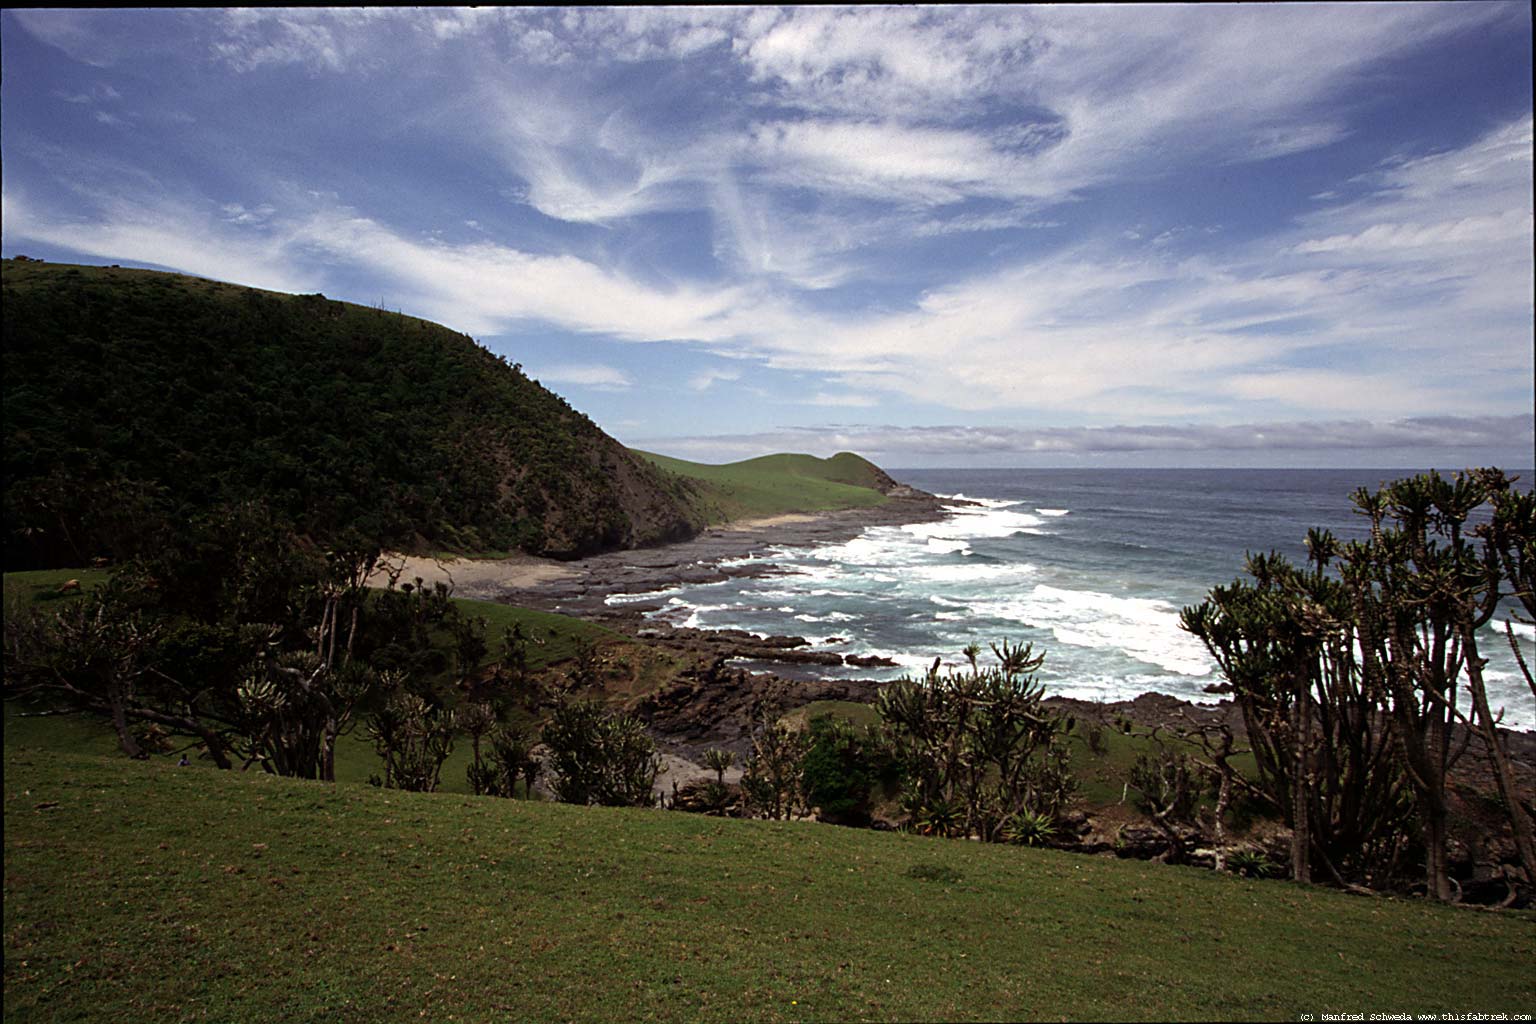 Beautiful South Africa: The Wild Coast | CancelloedArnoneNews